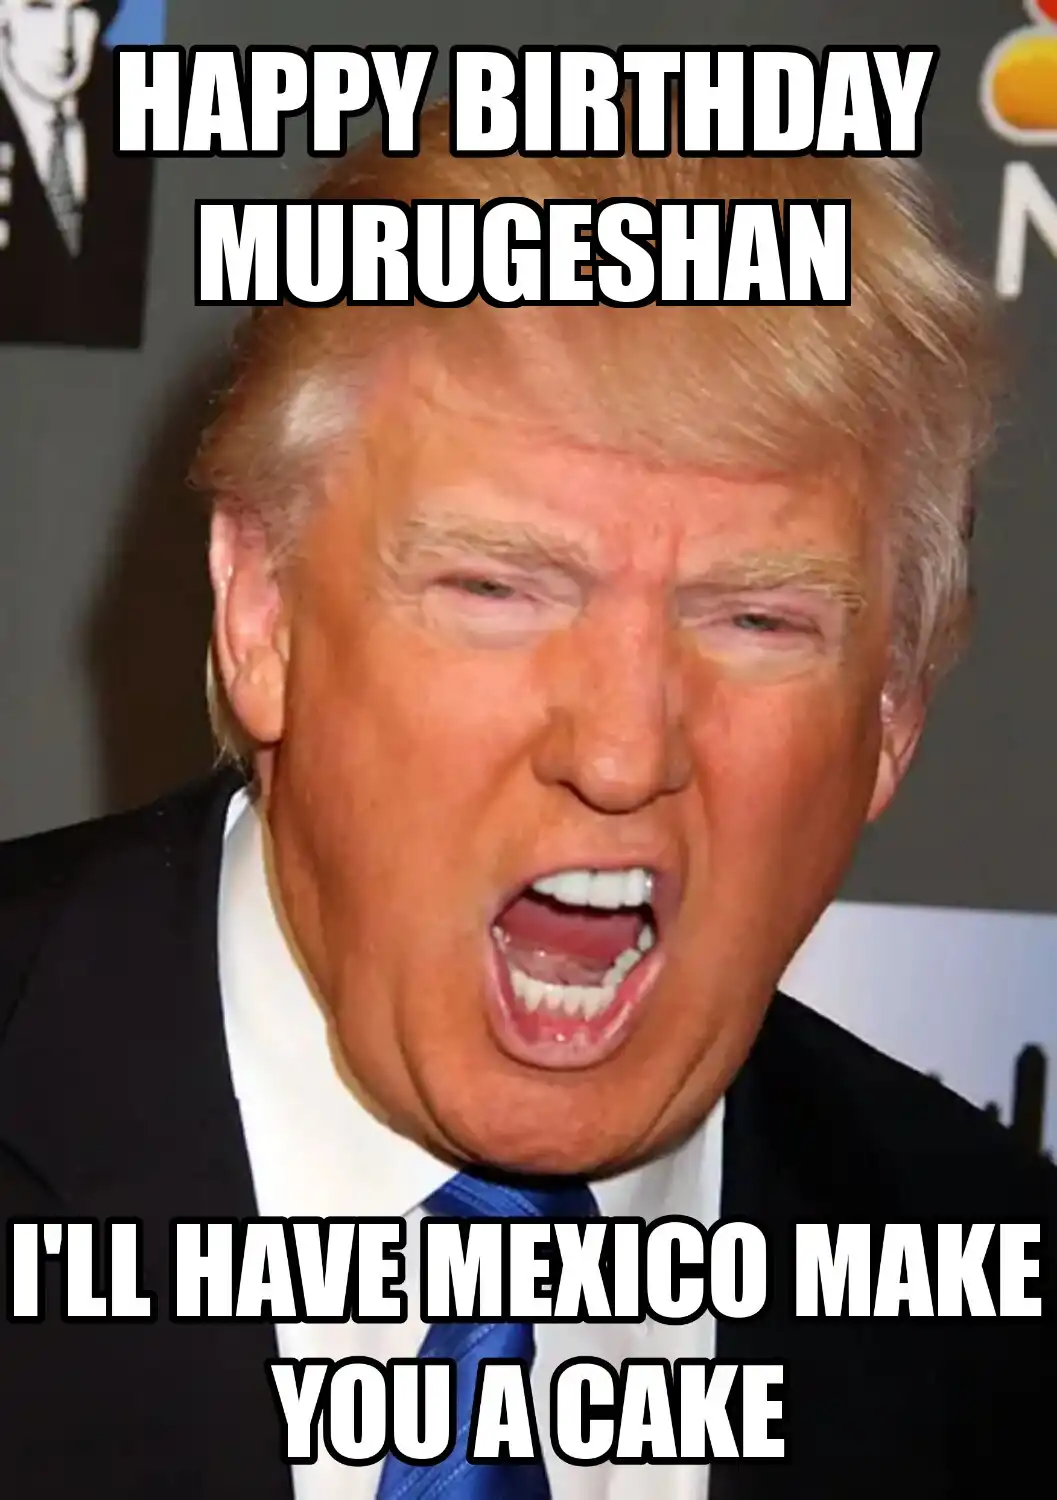 Happy Birthday Murugeshan Mexico Make You A Cake Meme